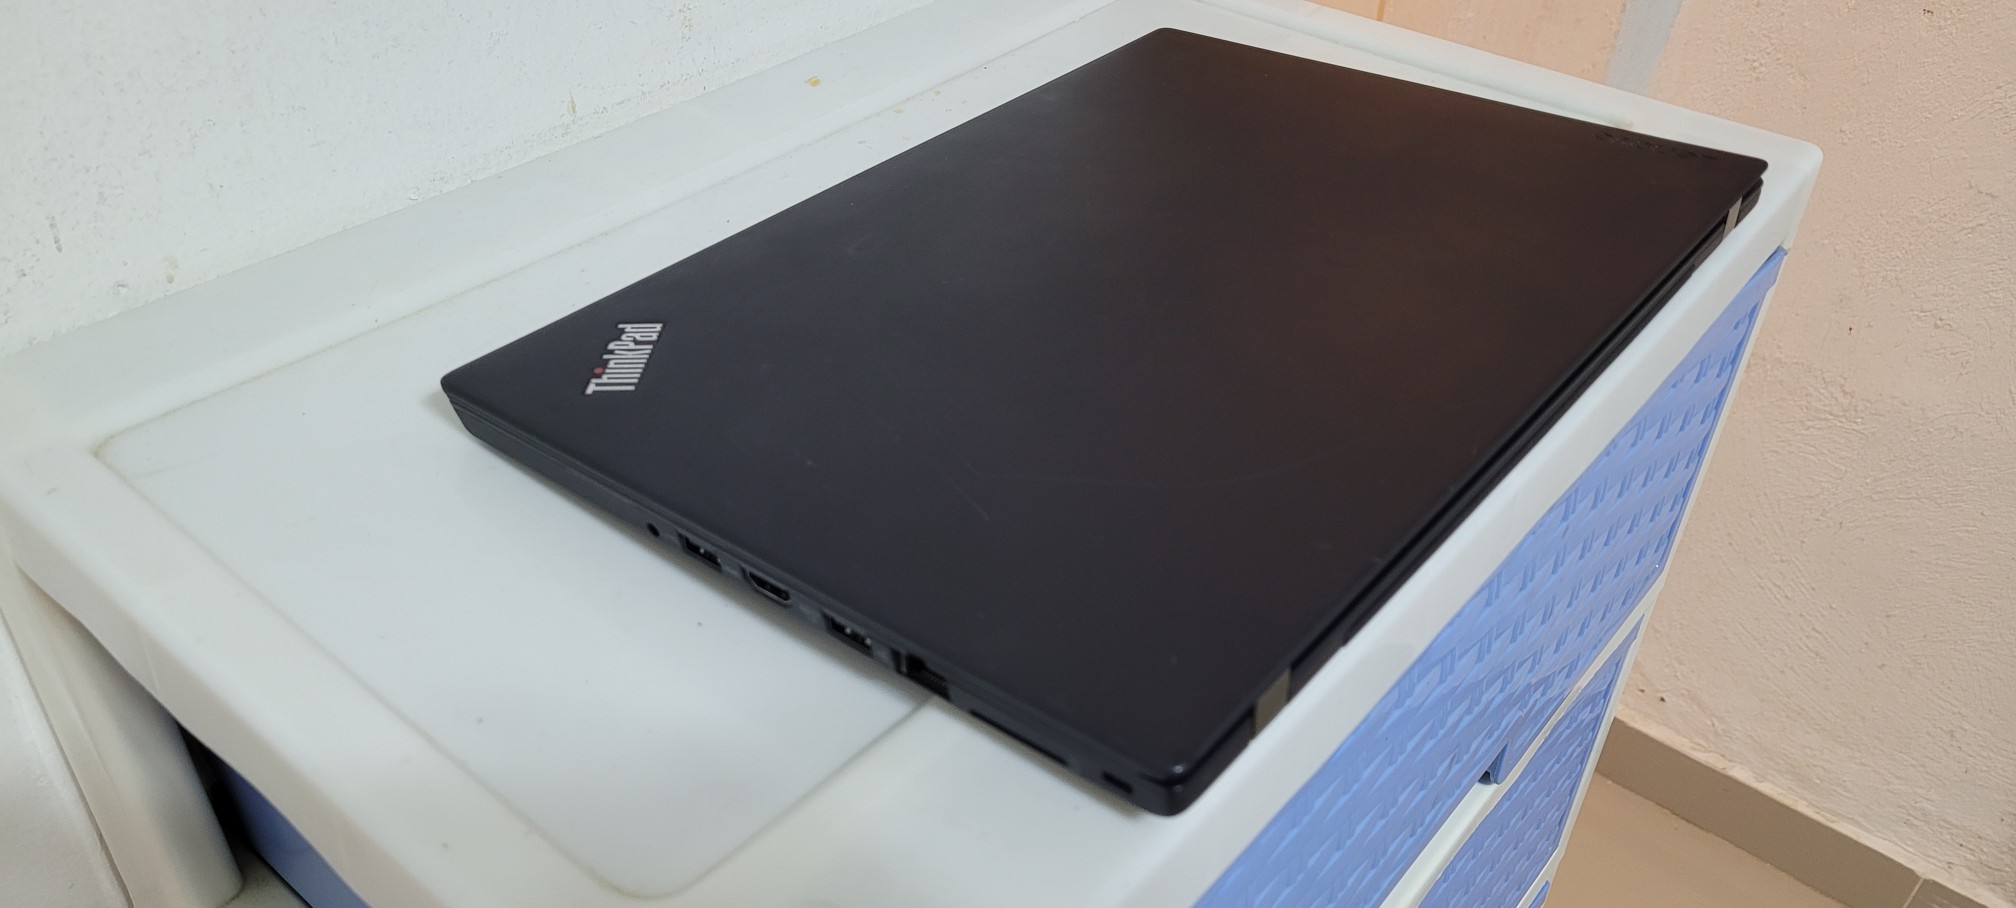 computadoras y laptops - Lenovo T470 14 Pulg Core i7 7ma Gen Ram 16gb Disco 256gb SSD Solido full 2